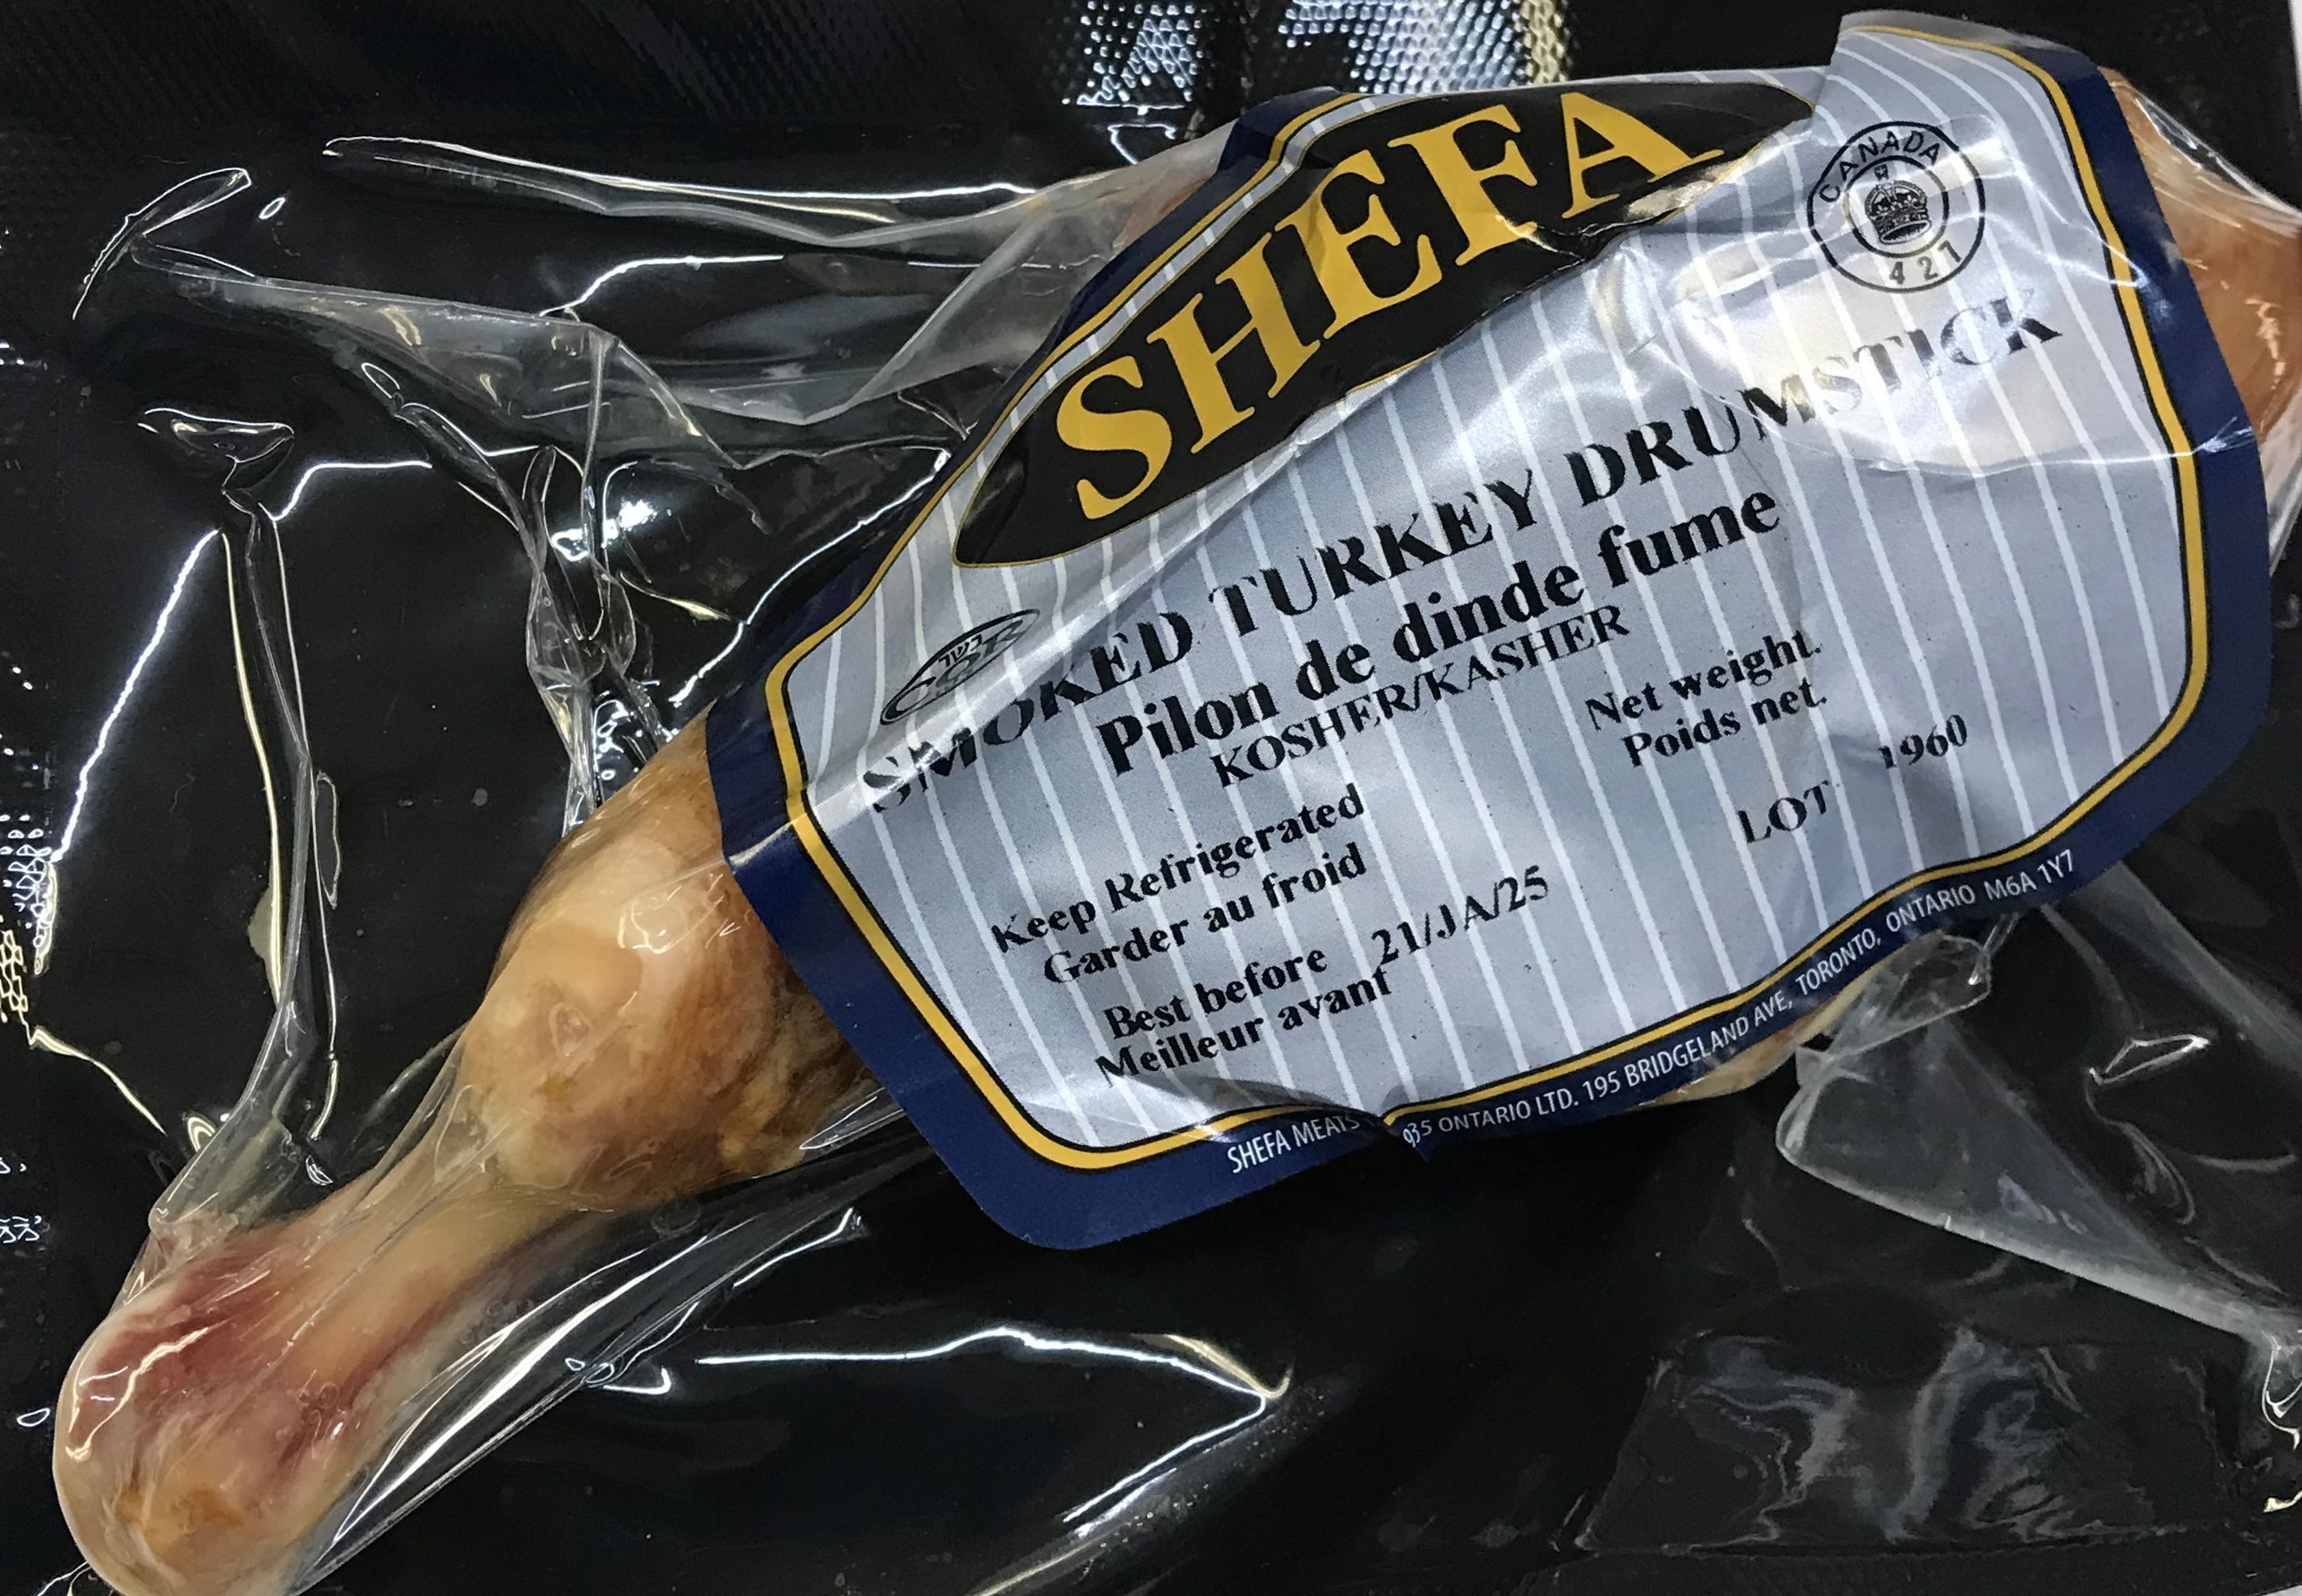 Shefa Smoked Turkey Drumstick 899kg 